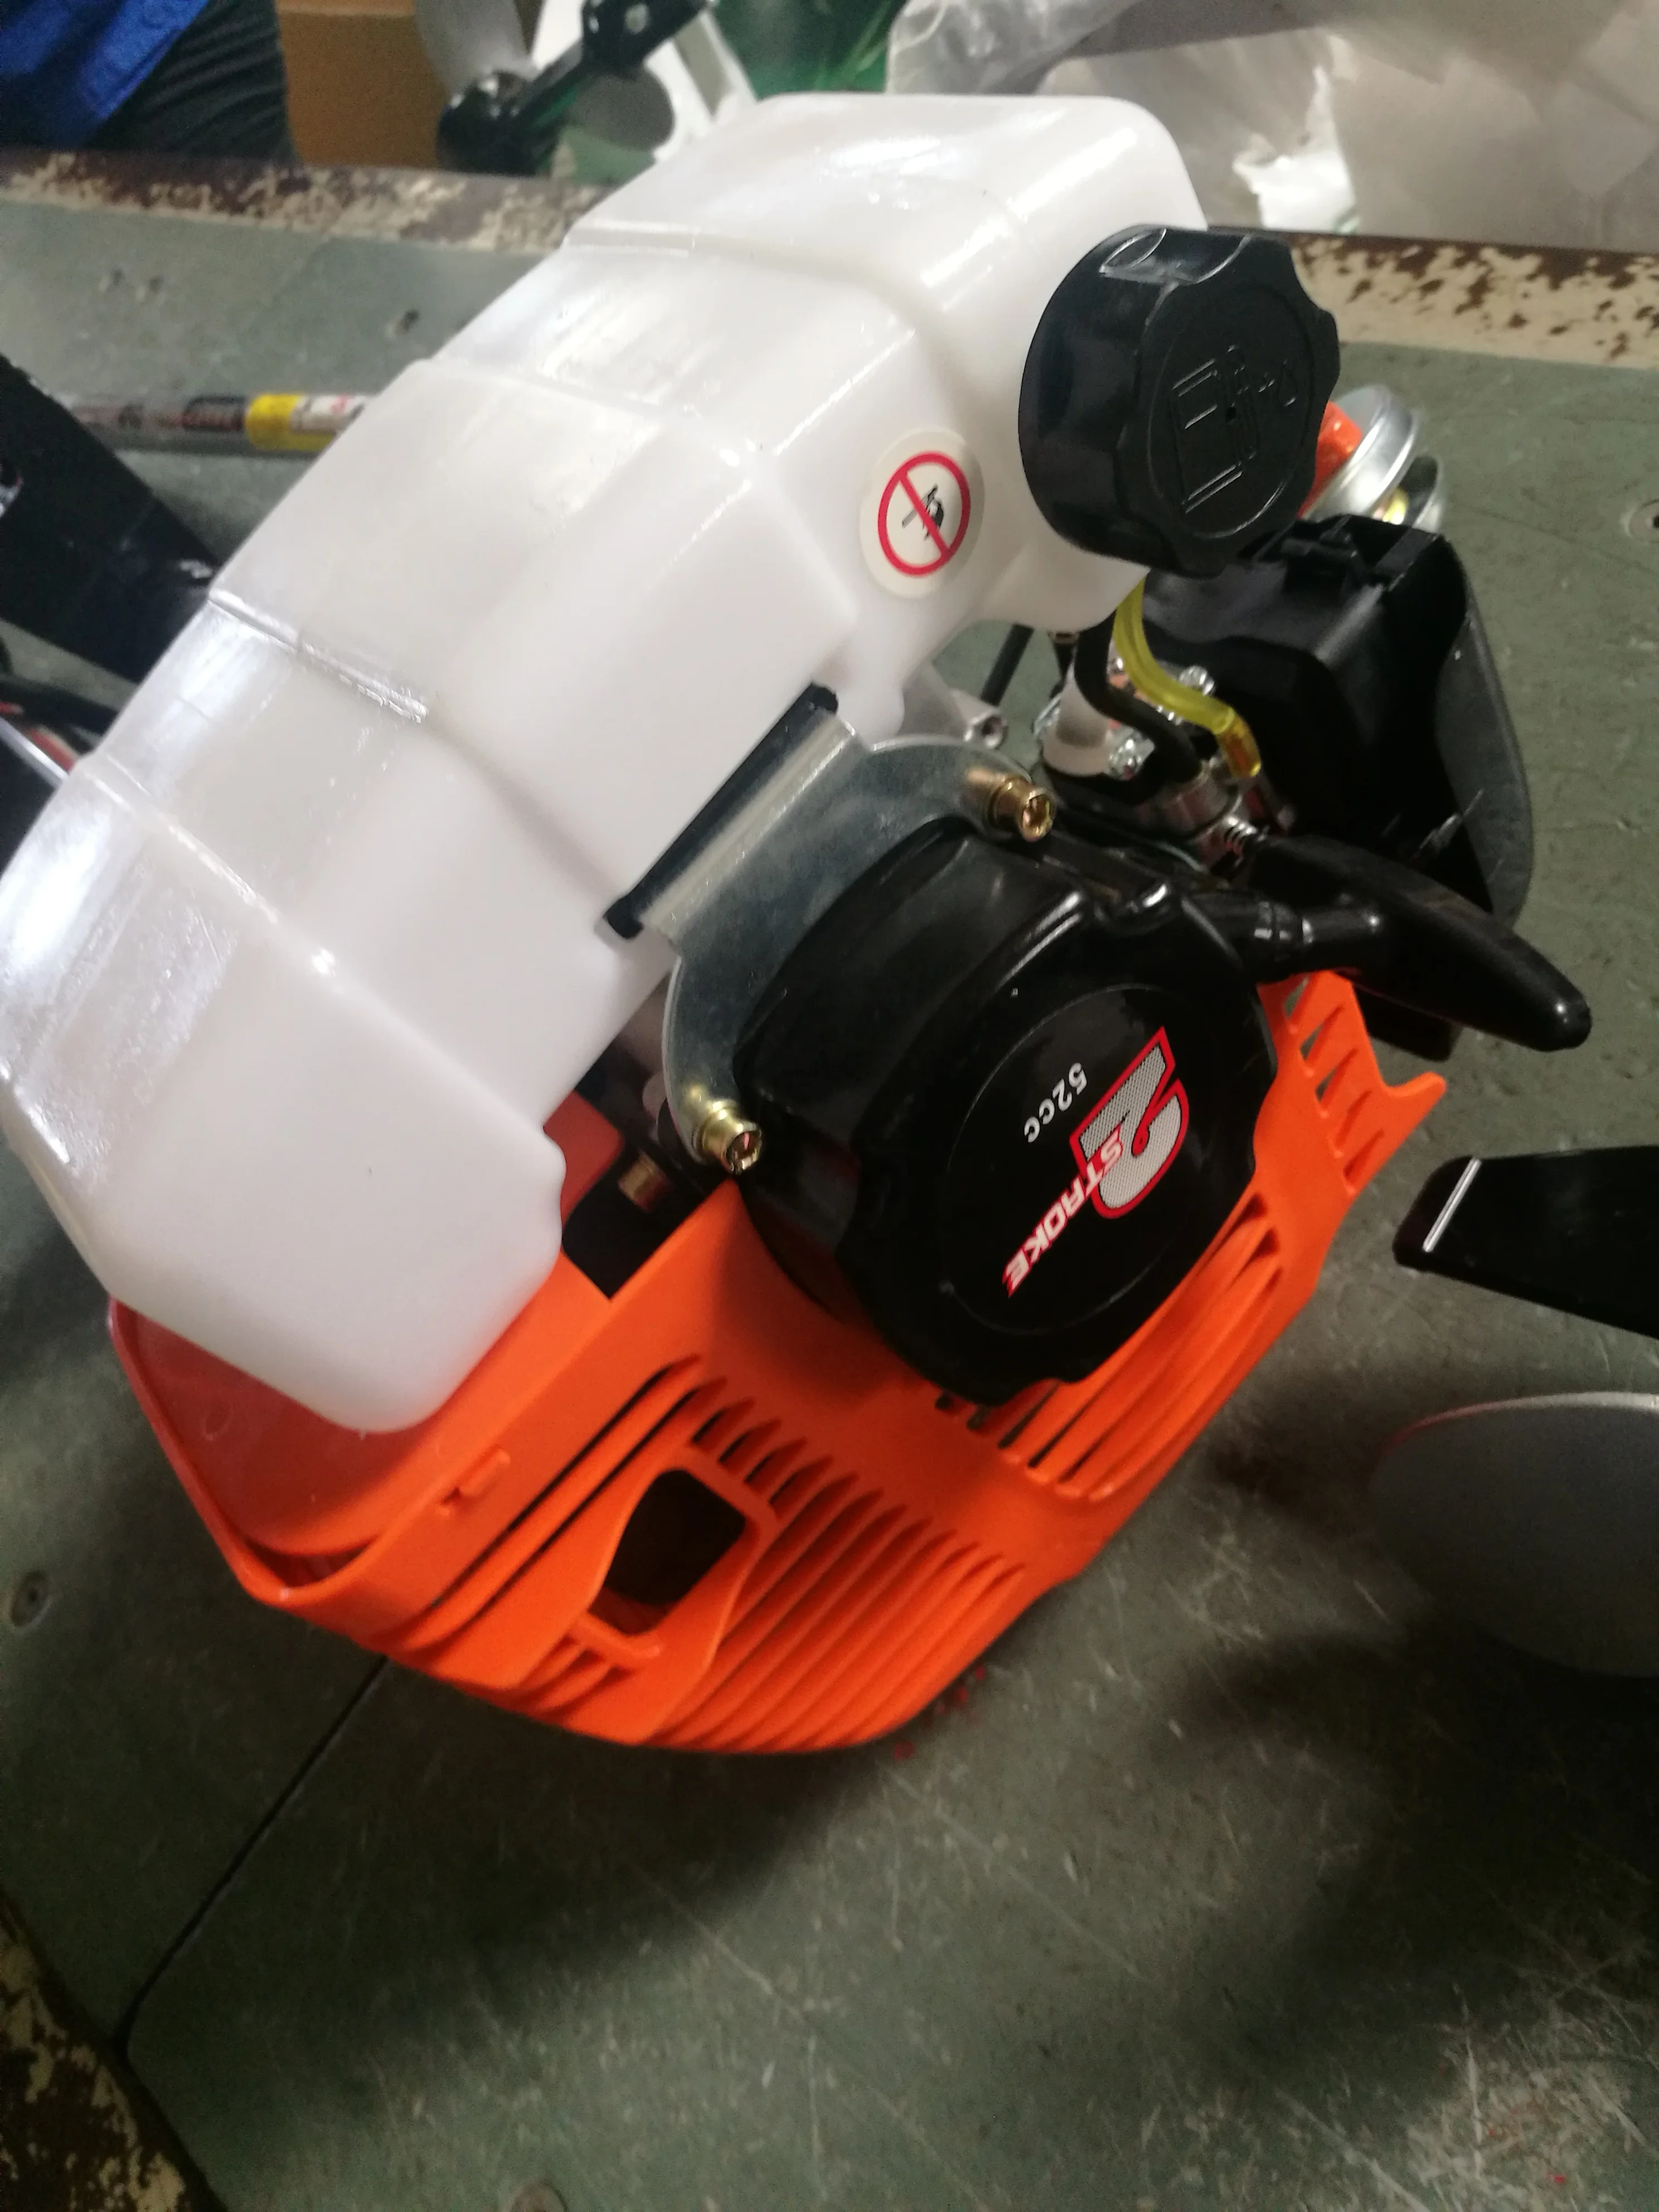 
New 52cc 2 Stroke Gas Outboard Motor 2.5 HP 